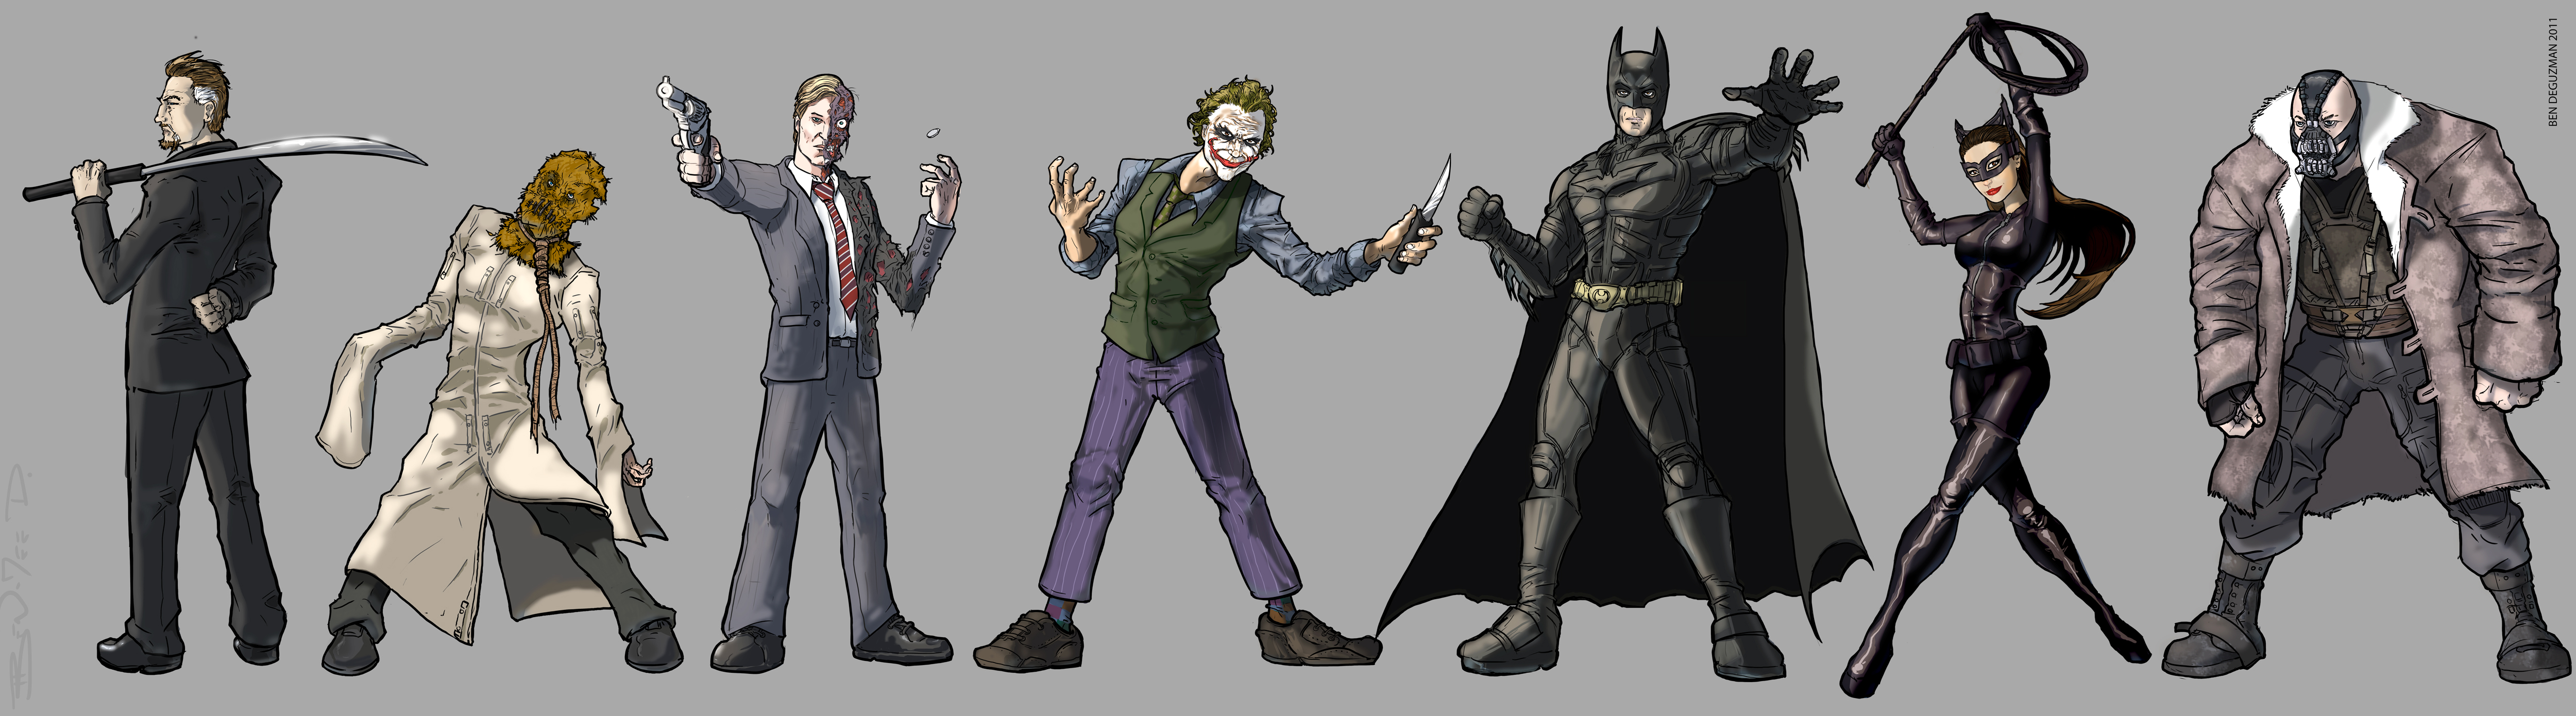 batman_and_villains___from_the_nolanverse_by_kinjamin-d4gi08j.jpg